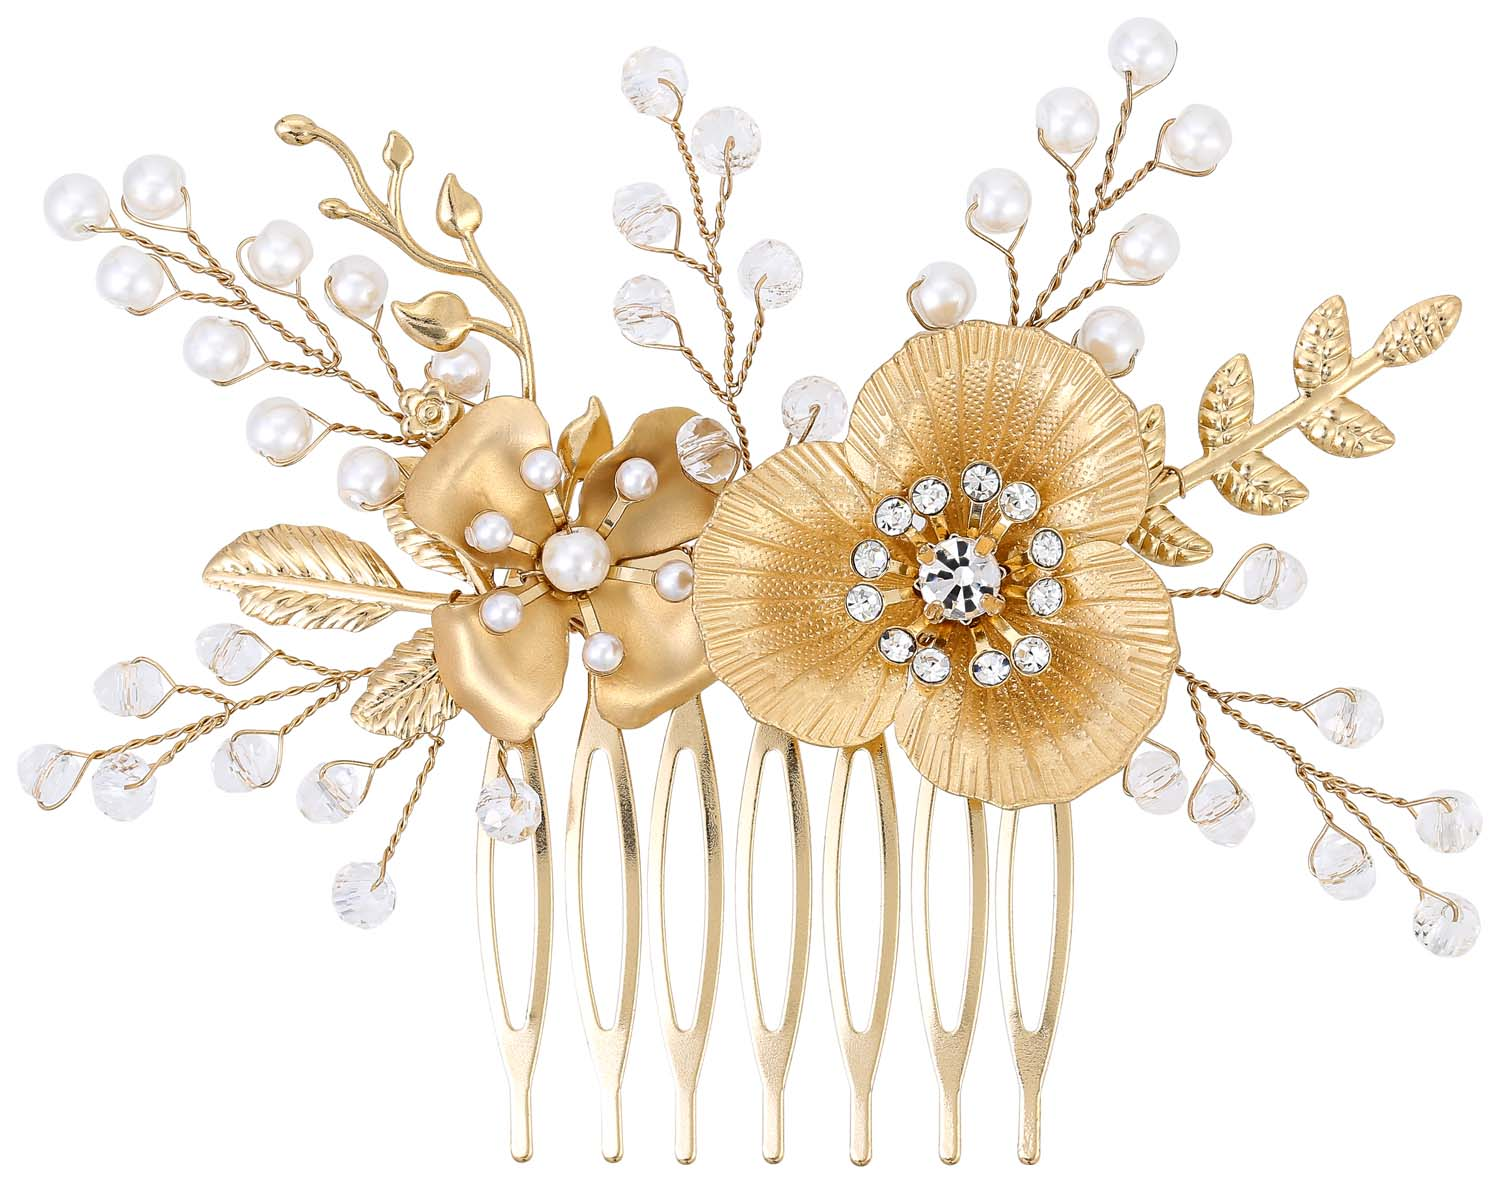 Pettine - Golden Flowers